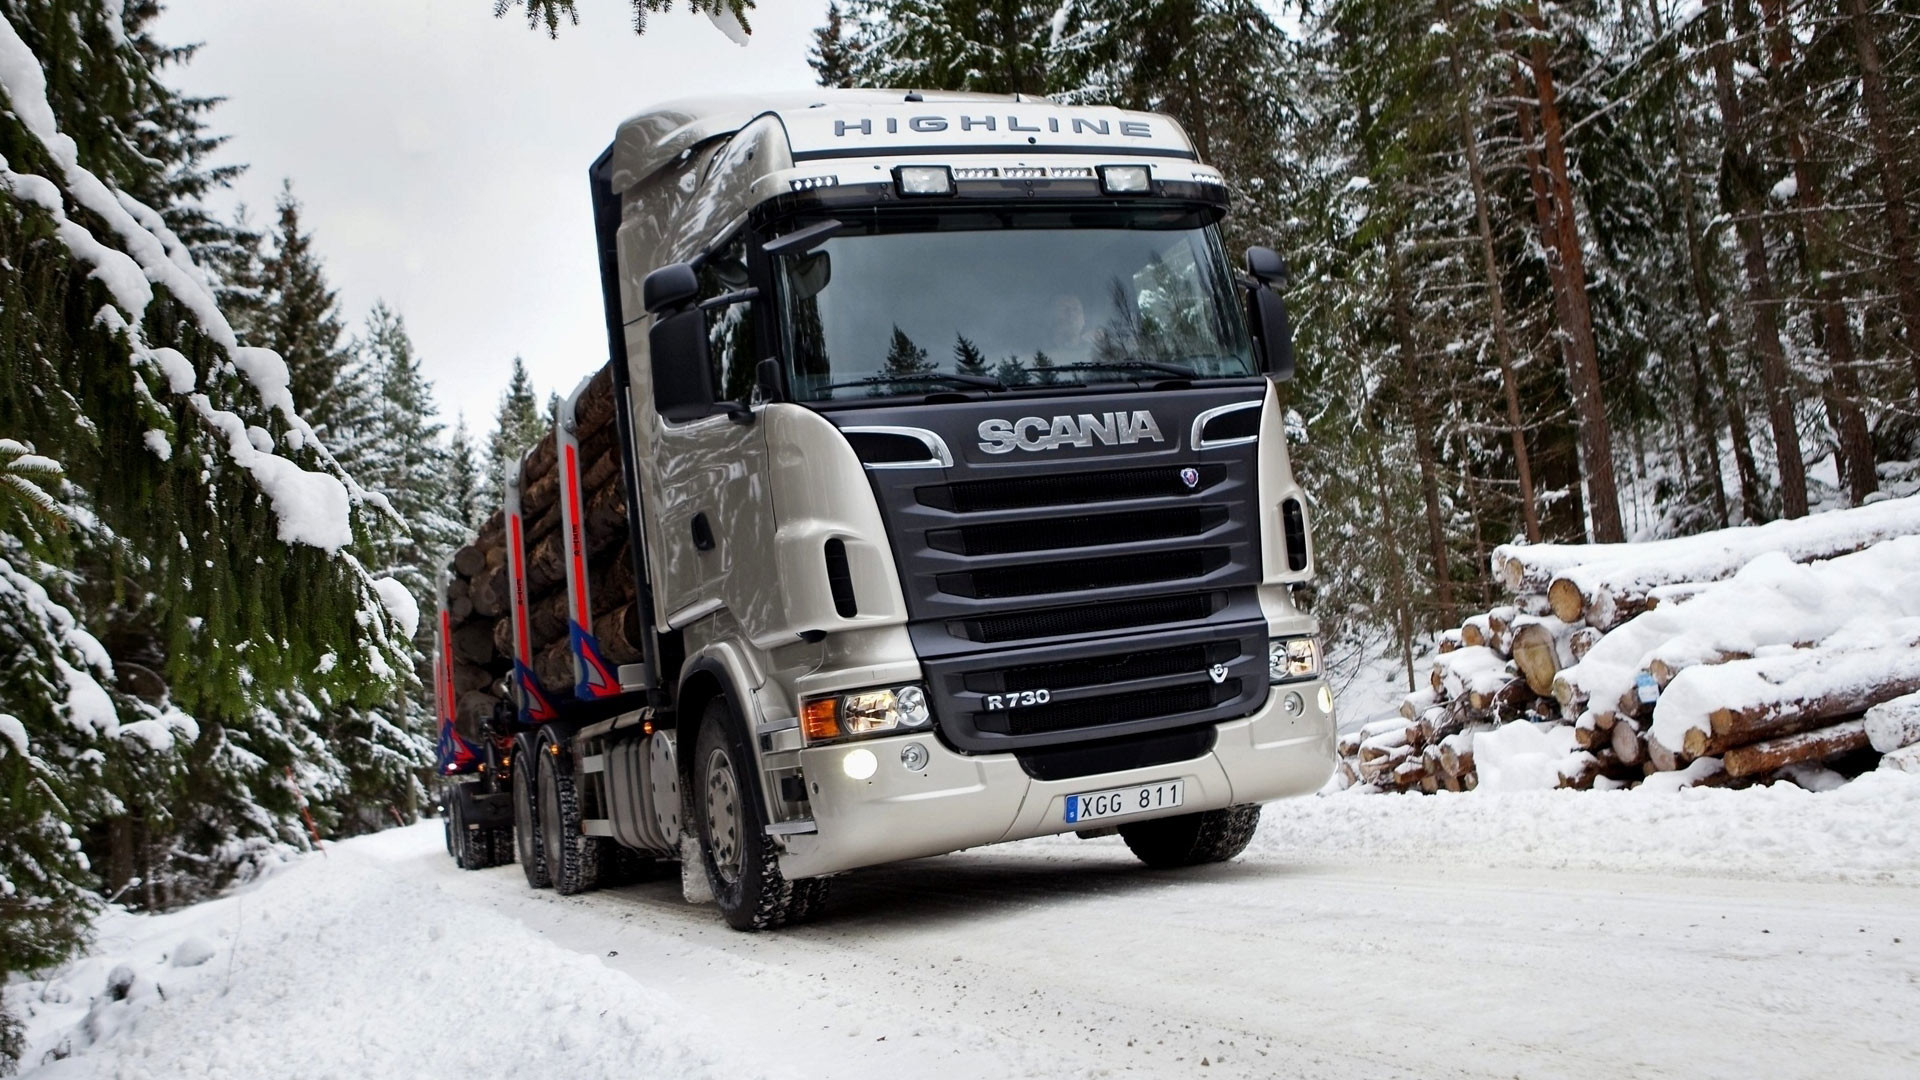 1920x1080 Download Scania R730 truck wallpaper ()